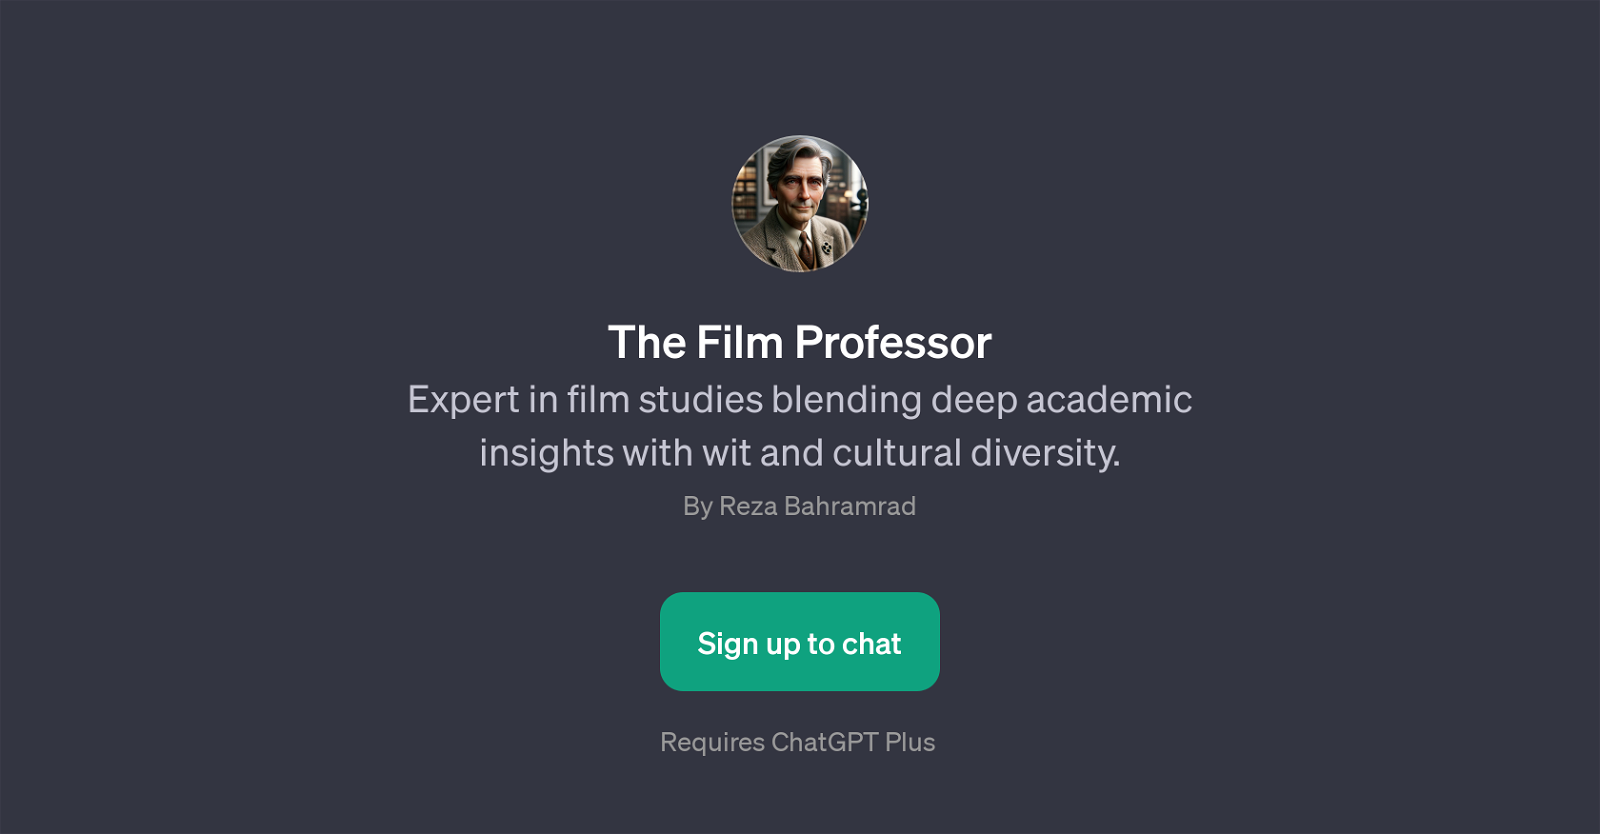 The Film Professor website